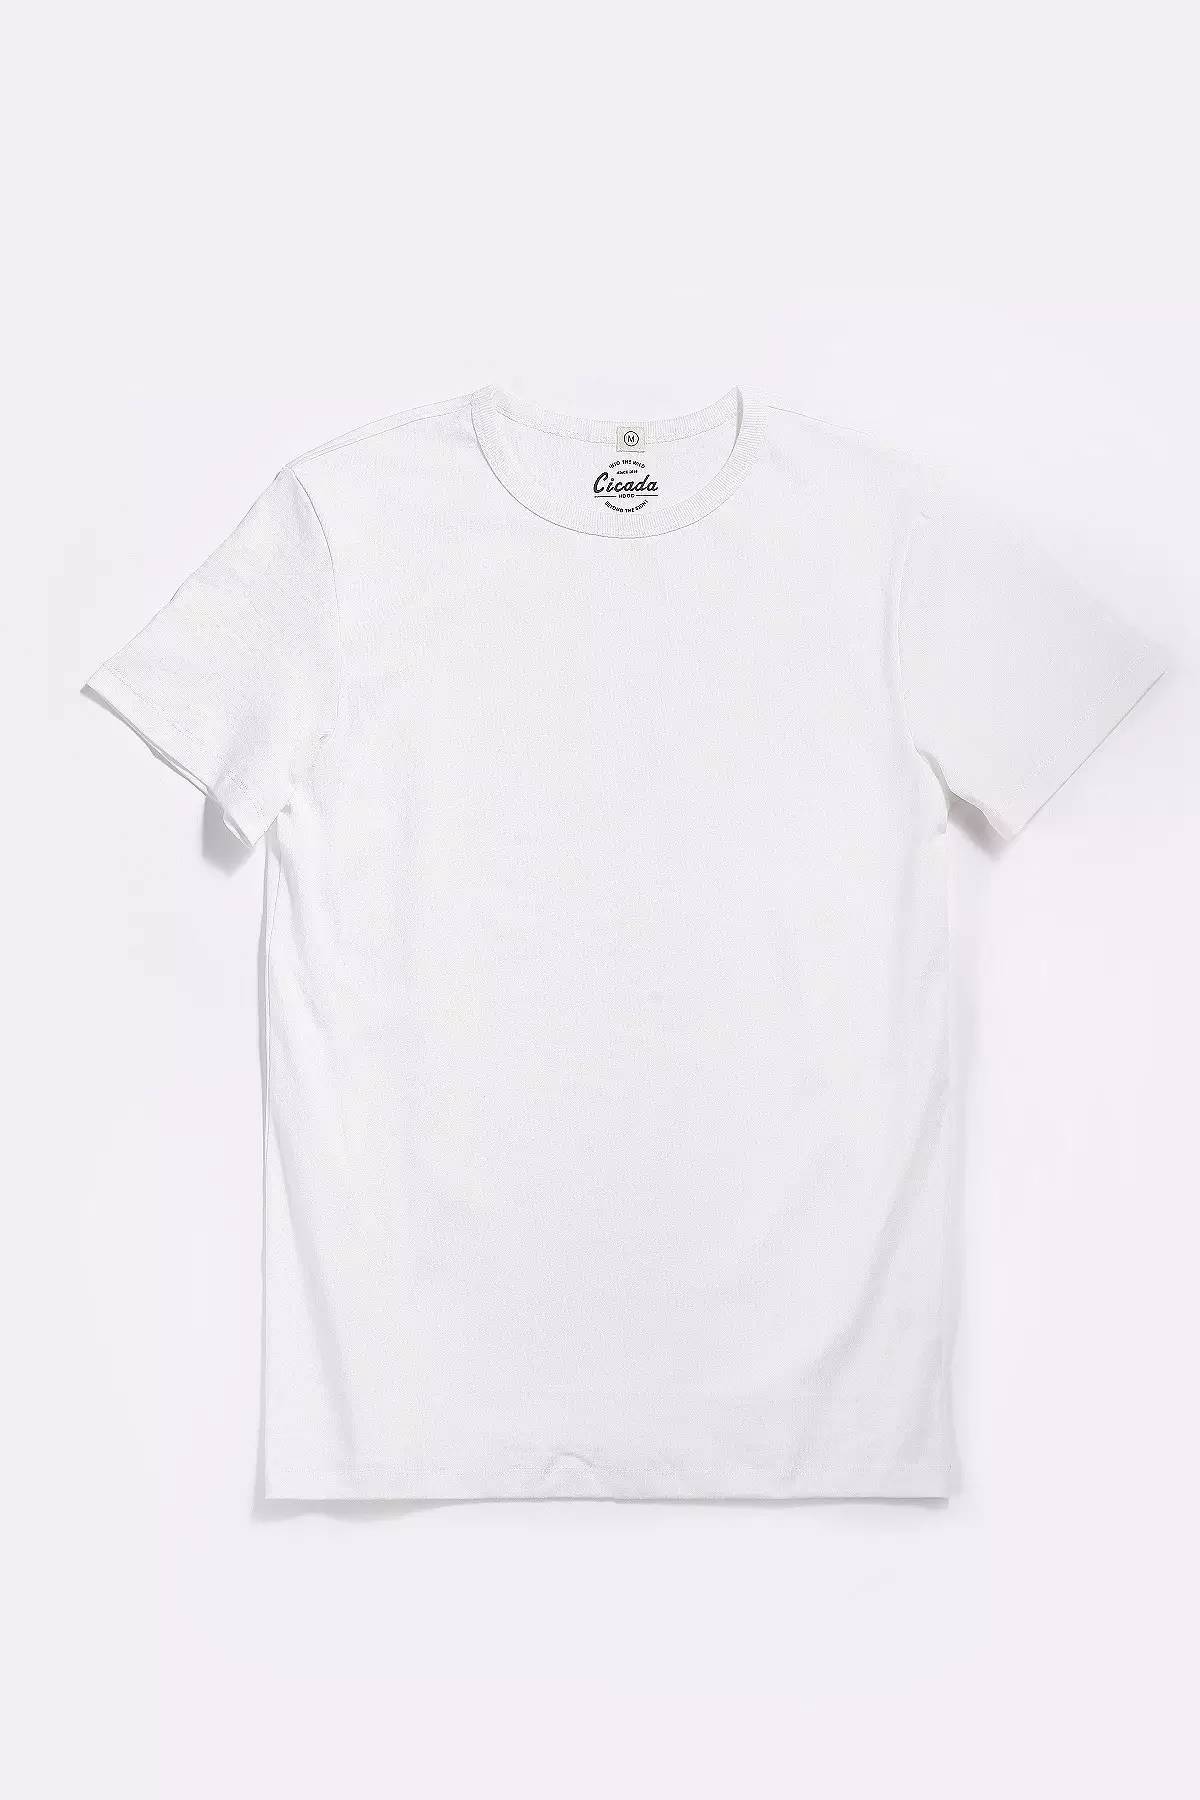 heritage collection 复古运动白t恤采用了100%高档优质全棉面料,竖纹